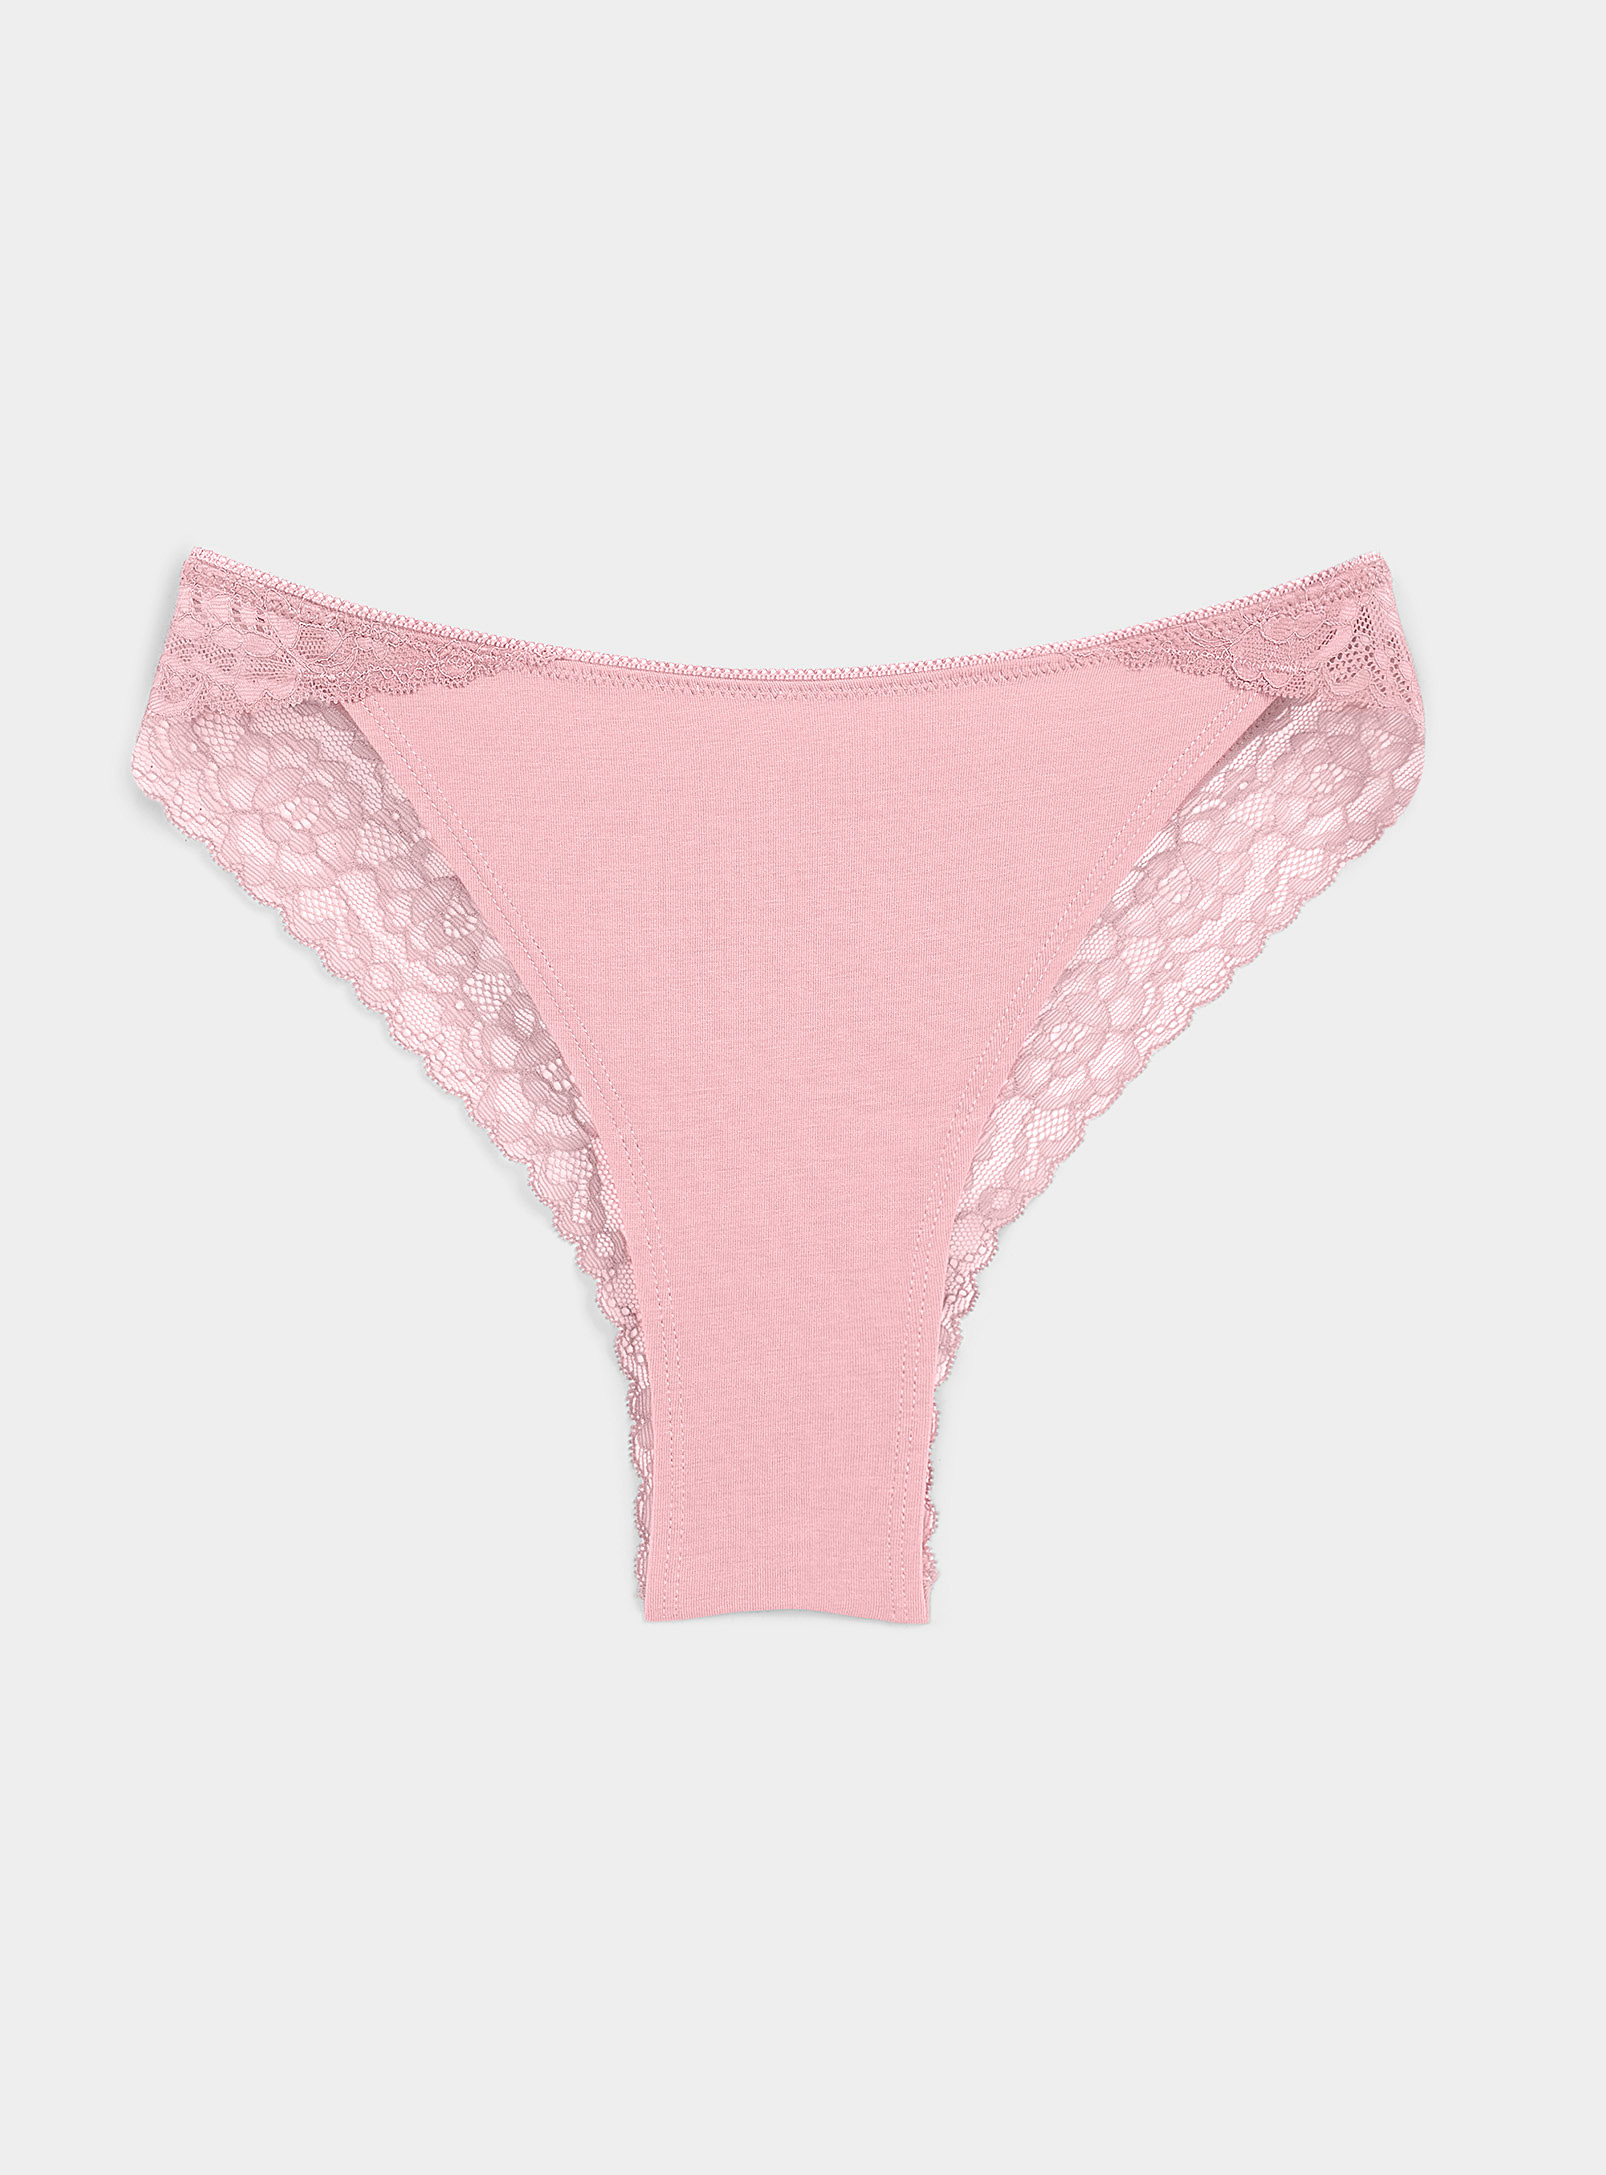 Miiyu Lace Trim Modal And Organic Cotton Brazilian Panty In Pink